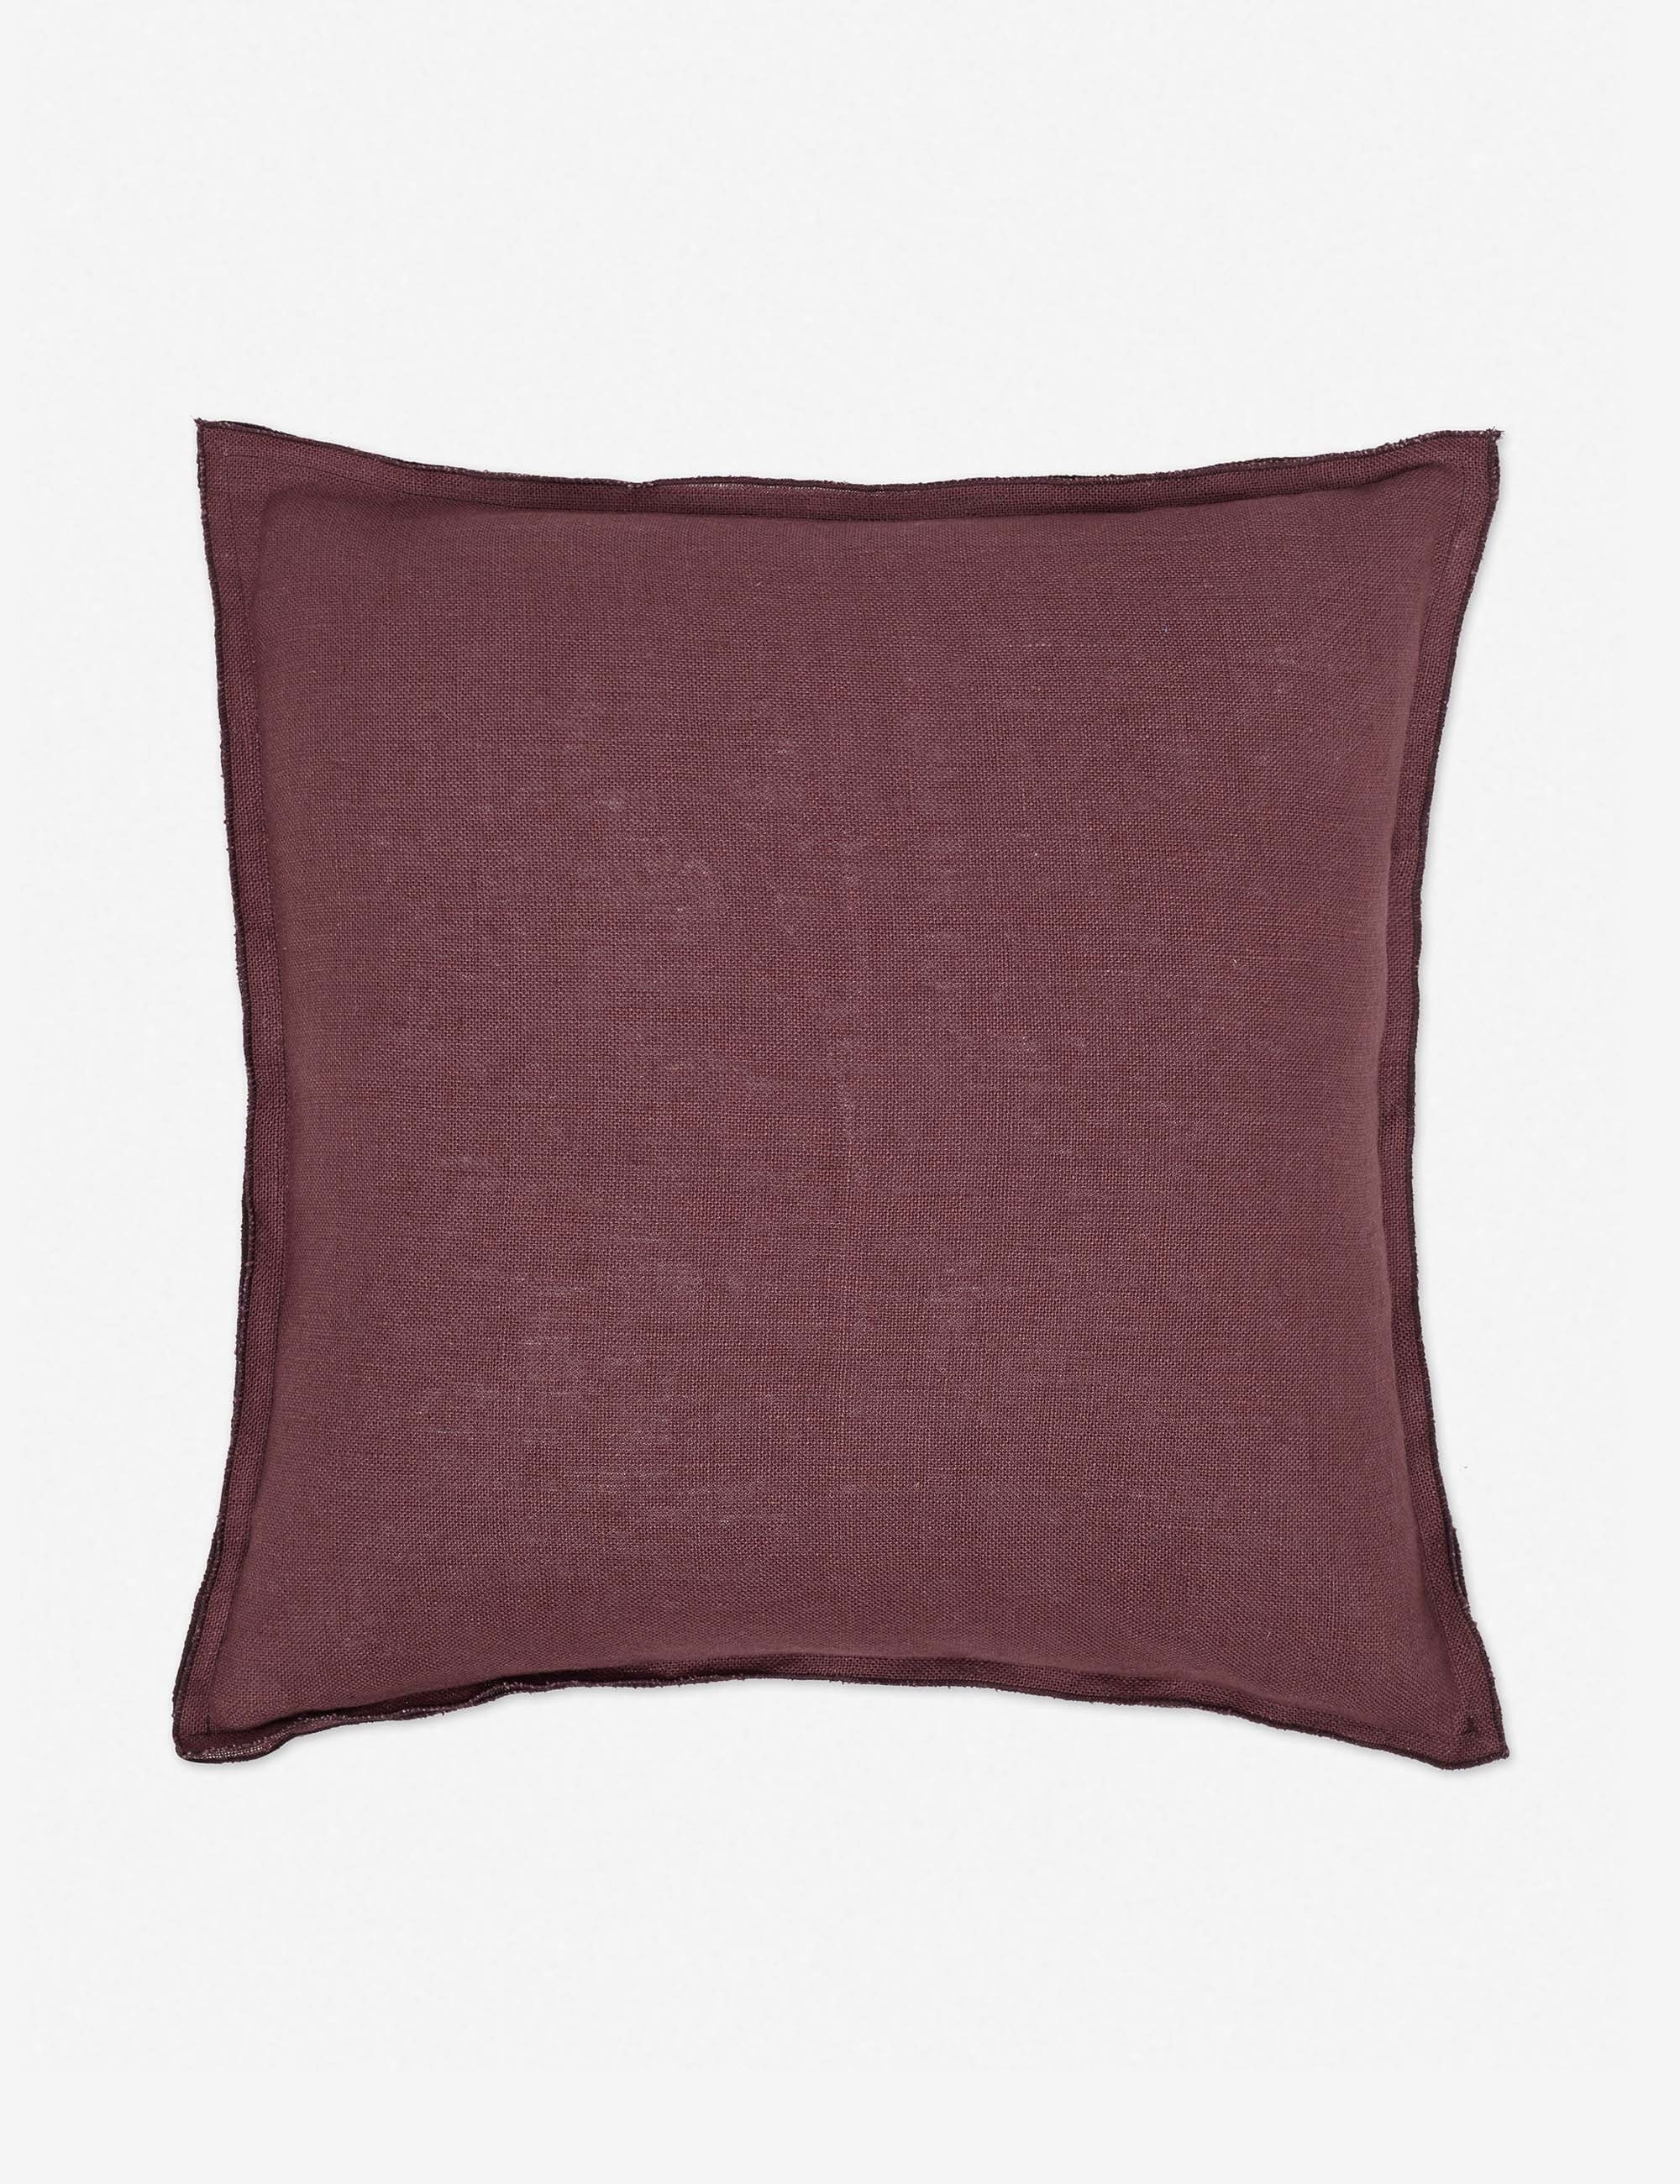 Arlo Linen Pillow, Aubergine - Image 2